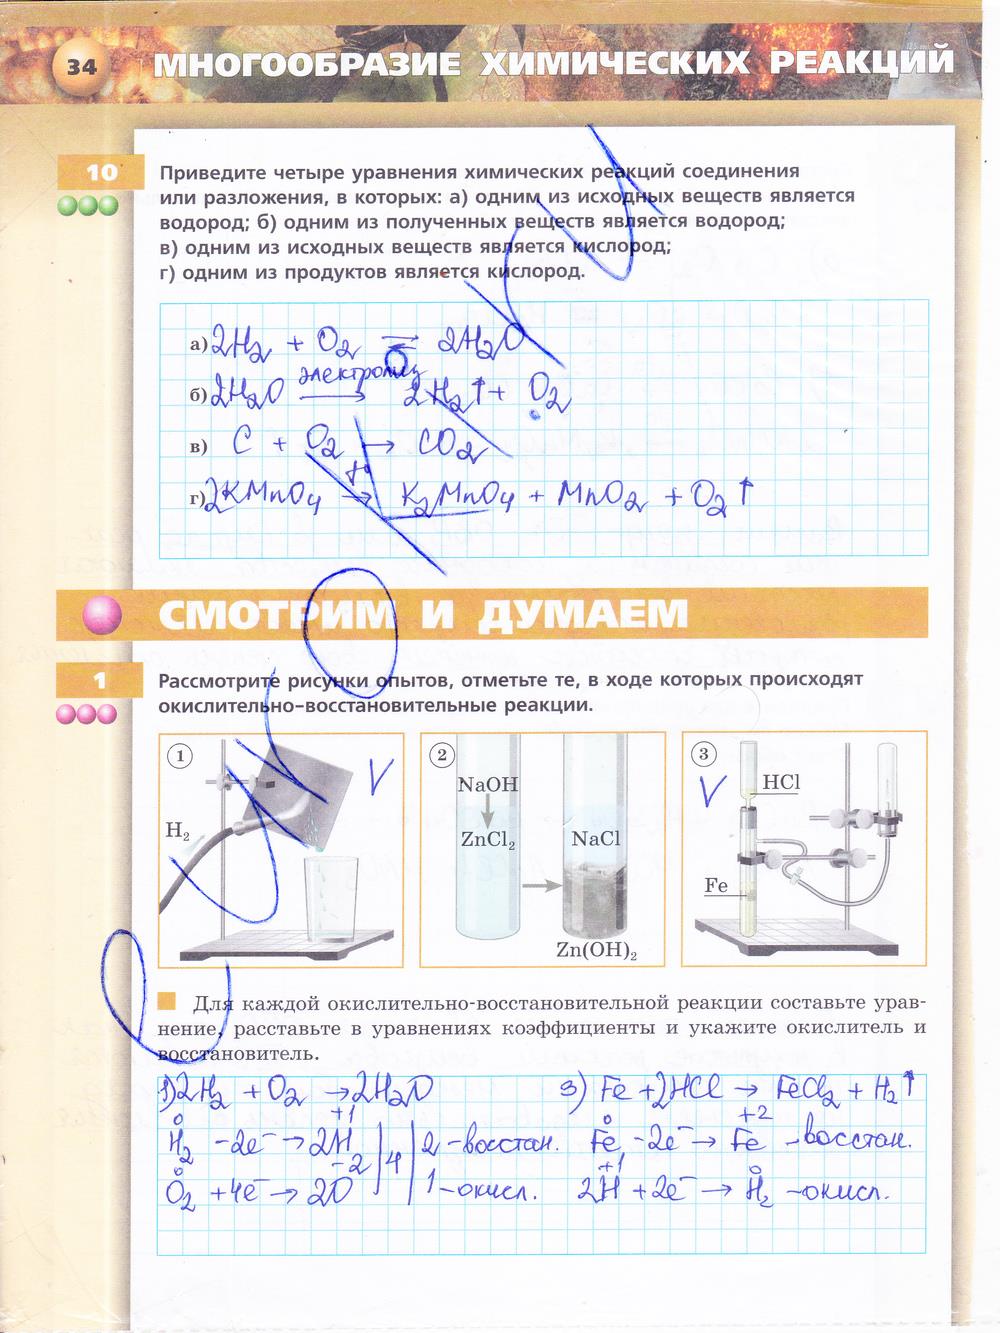 гдз 9 класс тетрадь-тренажёр страница 34 химия Гара